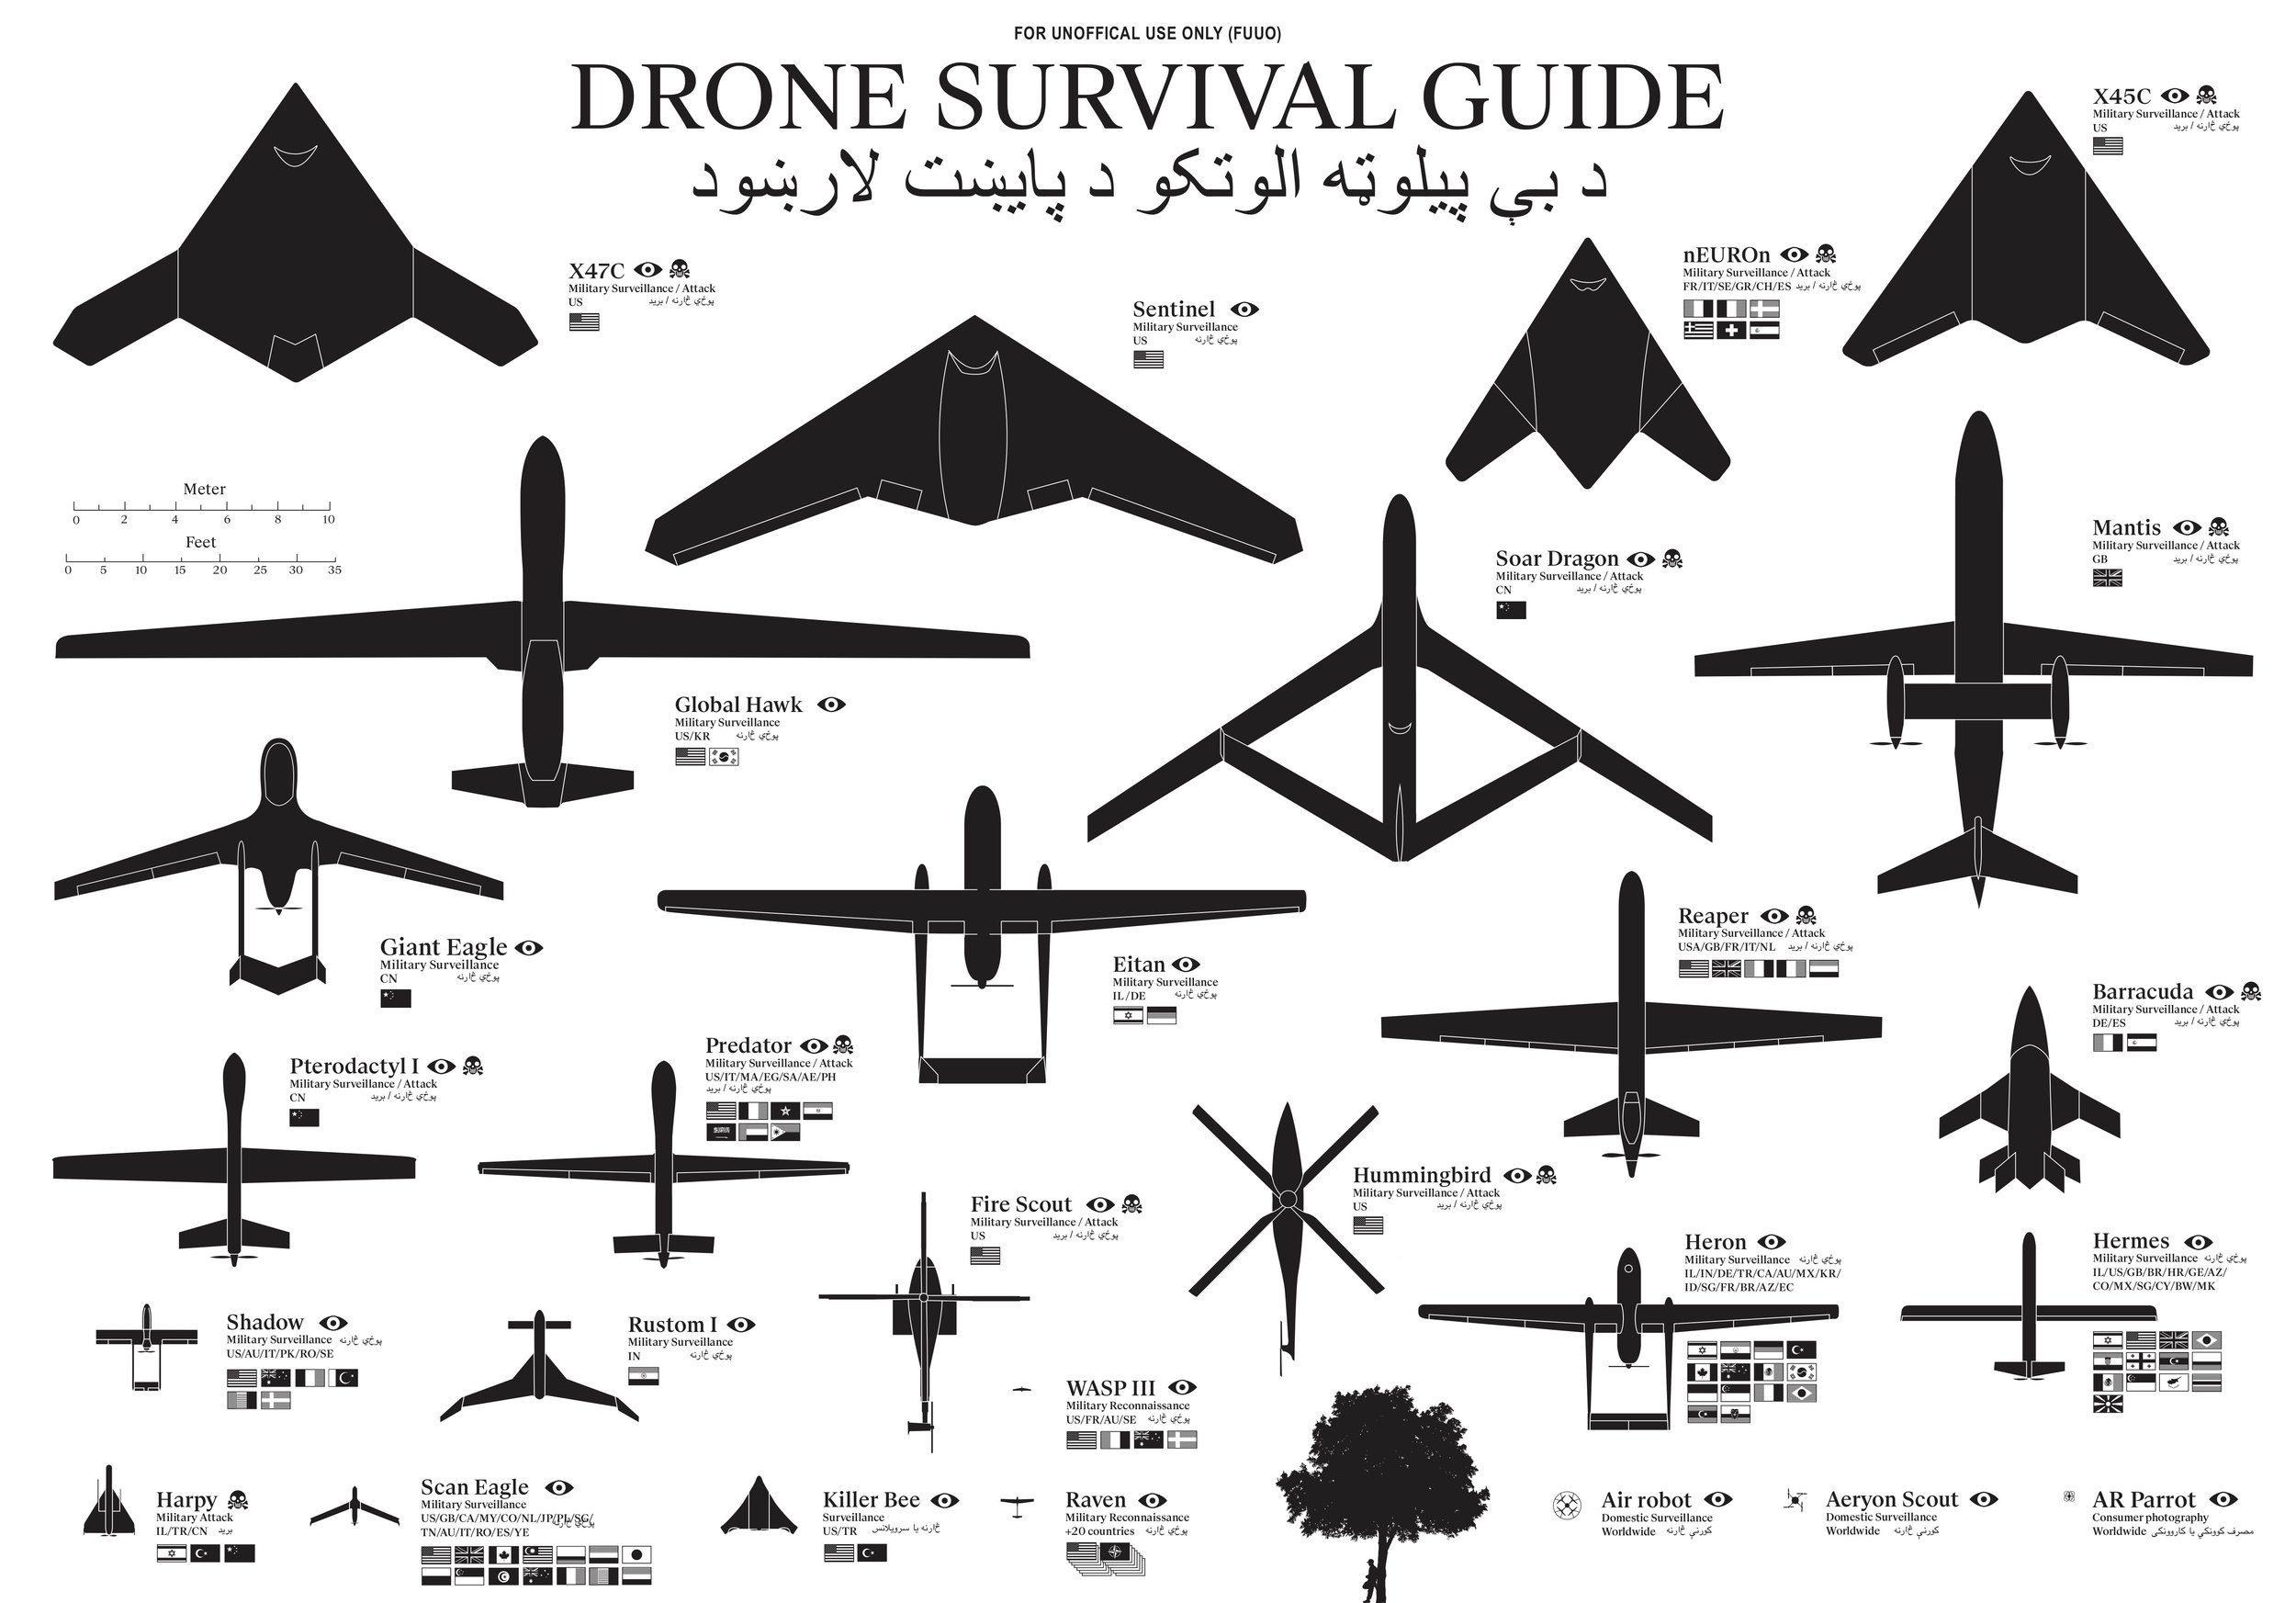 The Drone Survival Guide